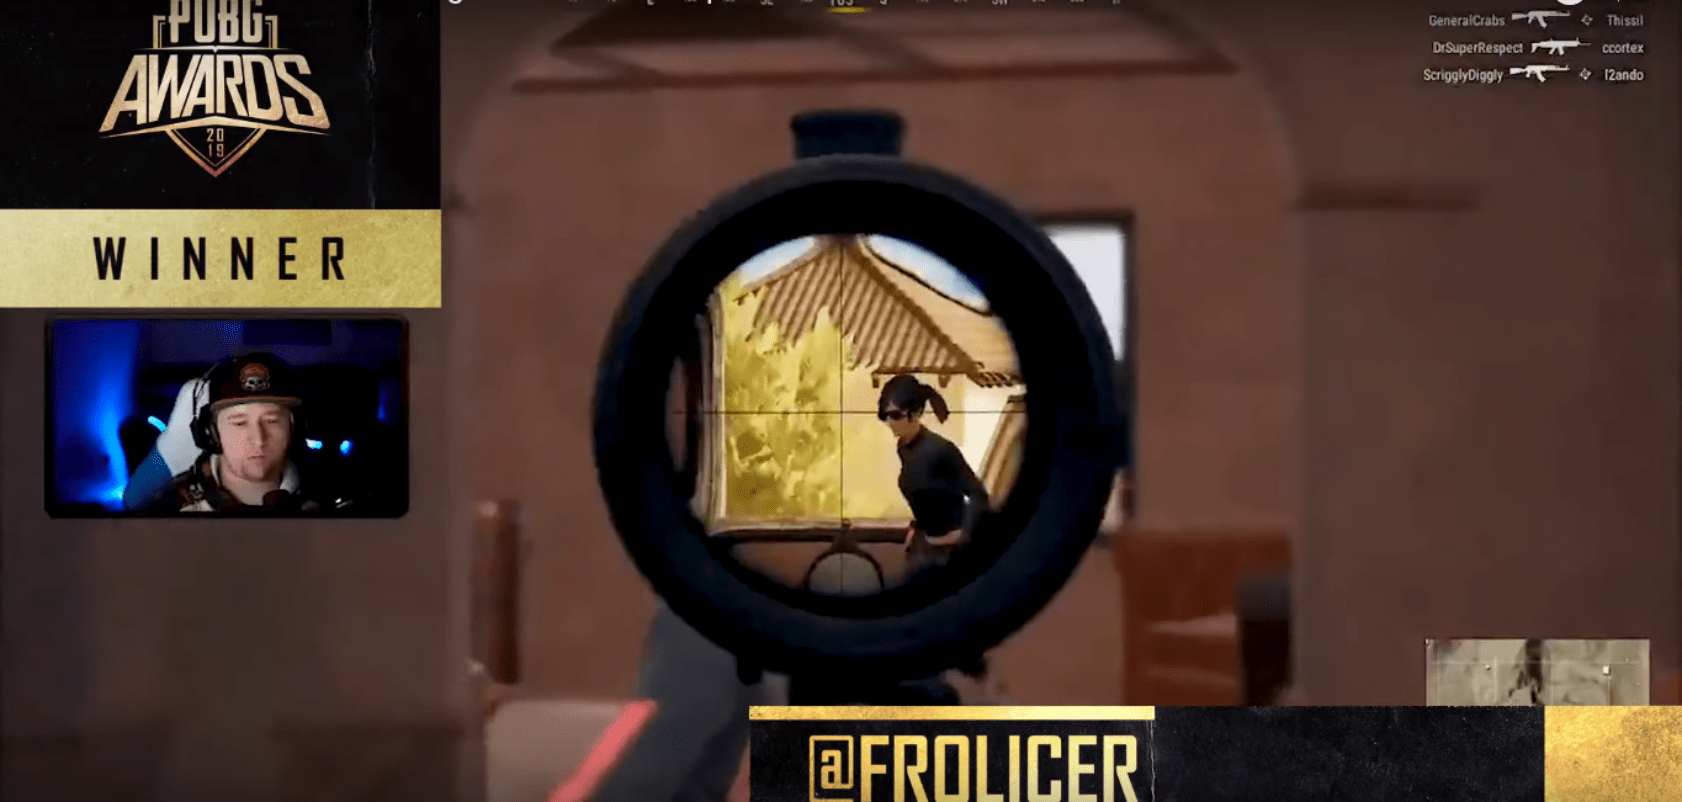 PUBG Gamer Wins Week 4  Of The 2019 PUBG Awards With His Impressive Close-Range Sniper Triple-Kill